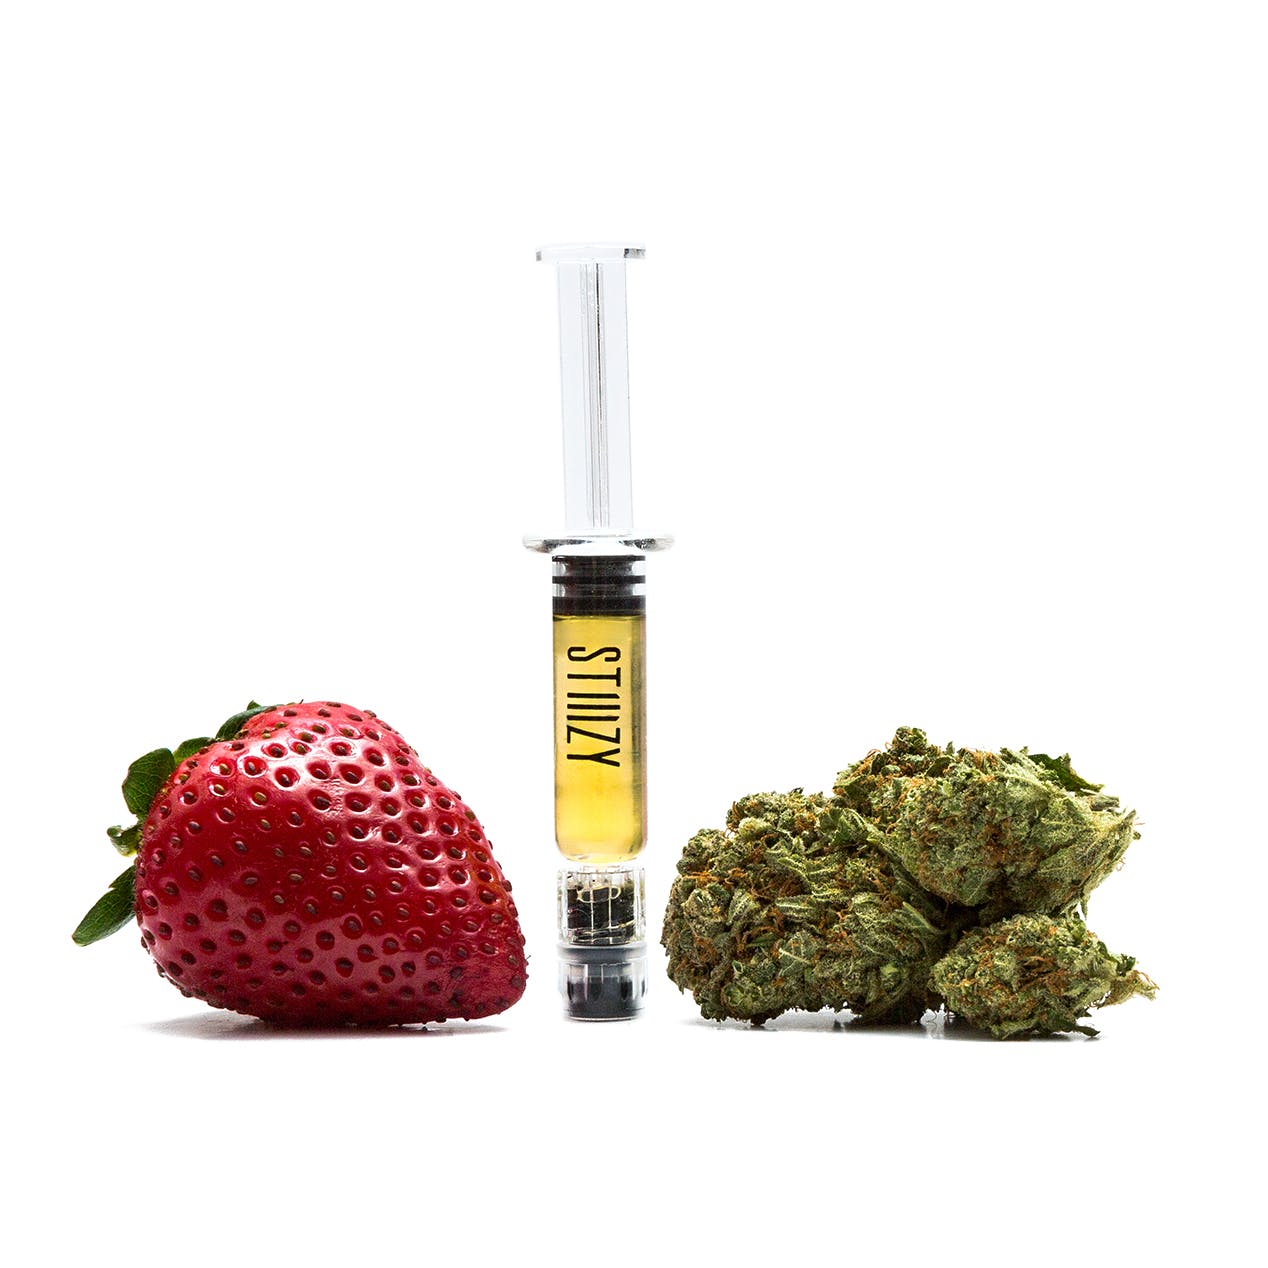 marijuana-dispensaries-true-central-20-cap-collective-in-los-angeles-strawberry-cough-syringe